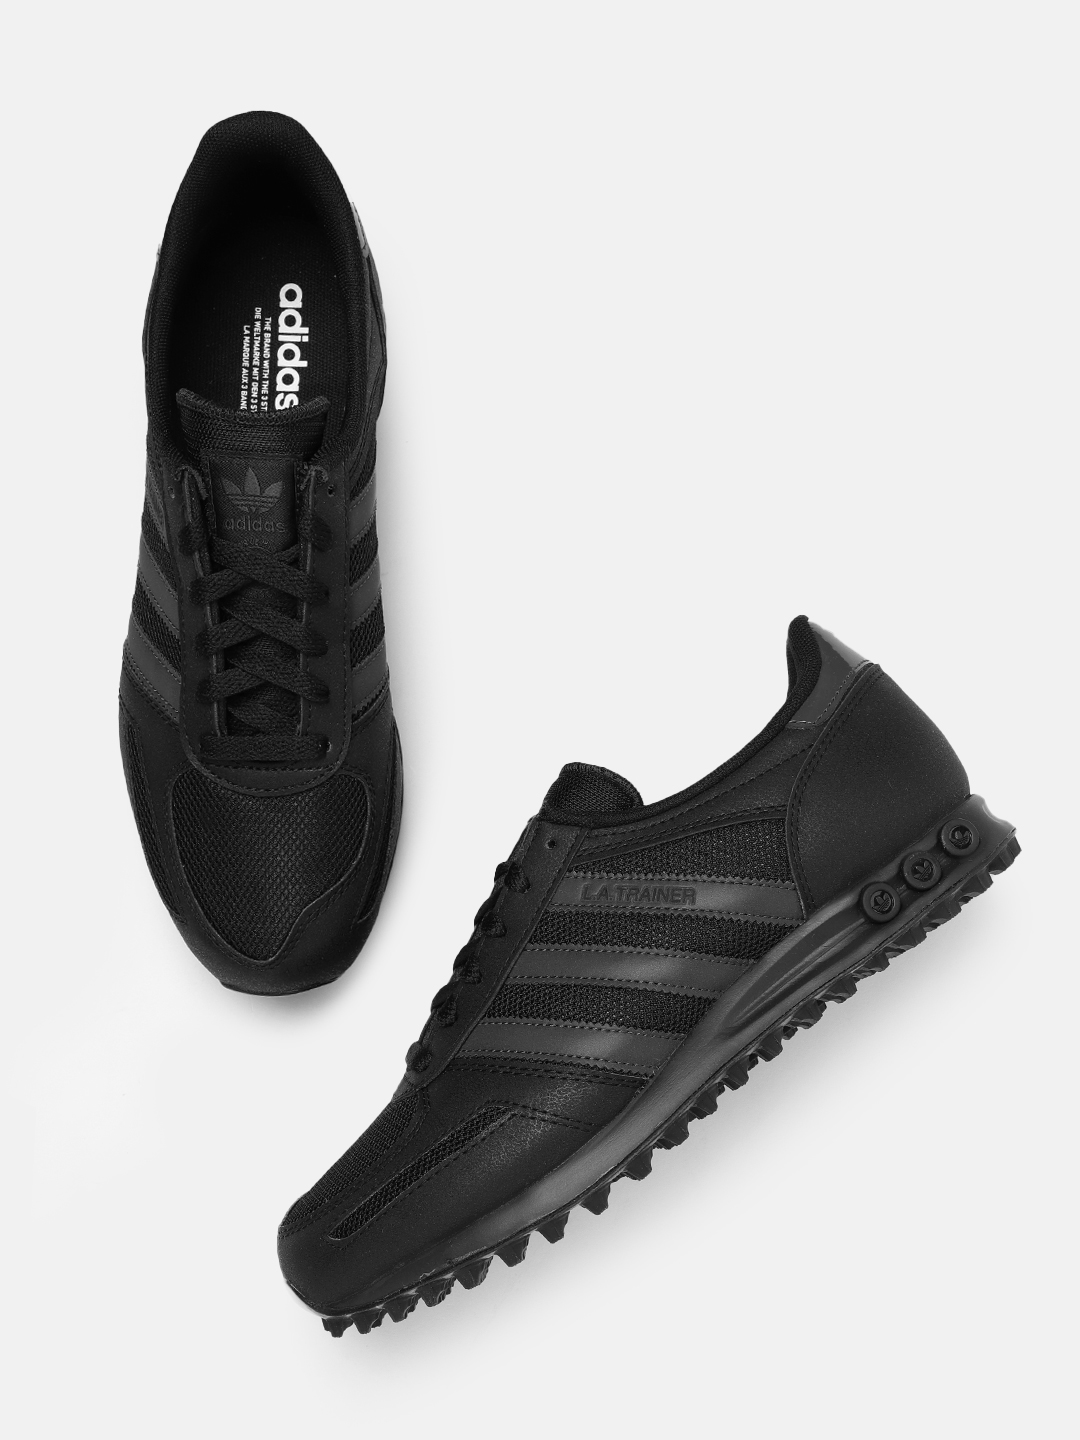 Adidas Black Casual Sneakers Shop | bellvalefarms.com